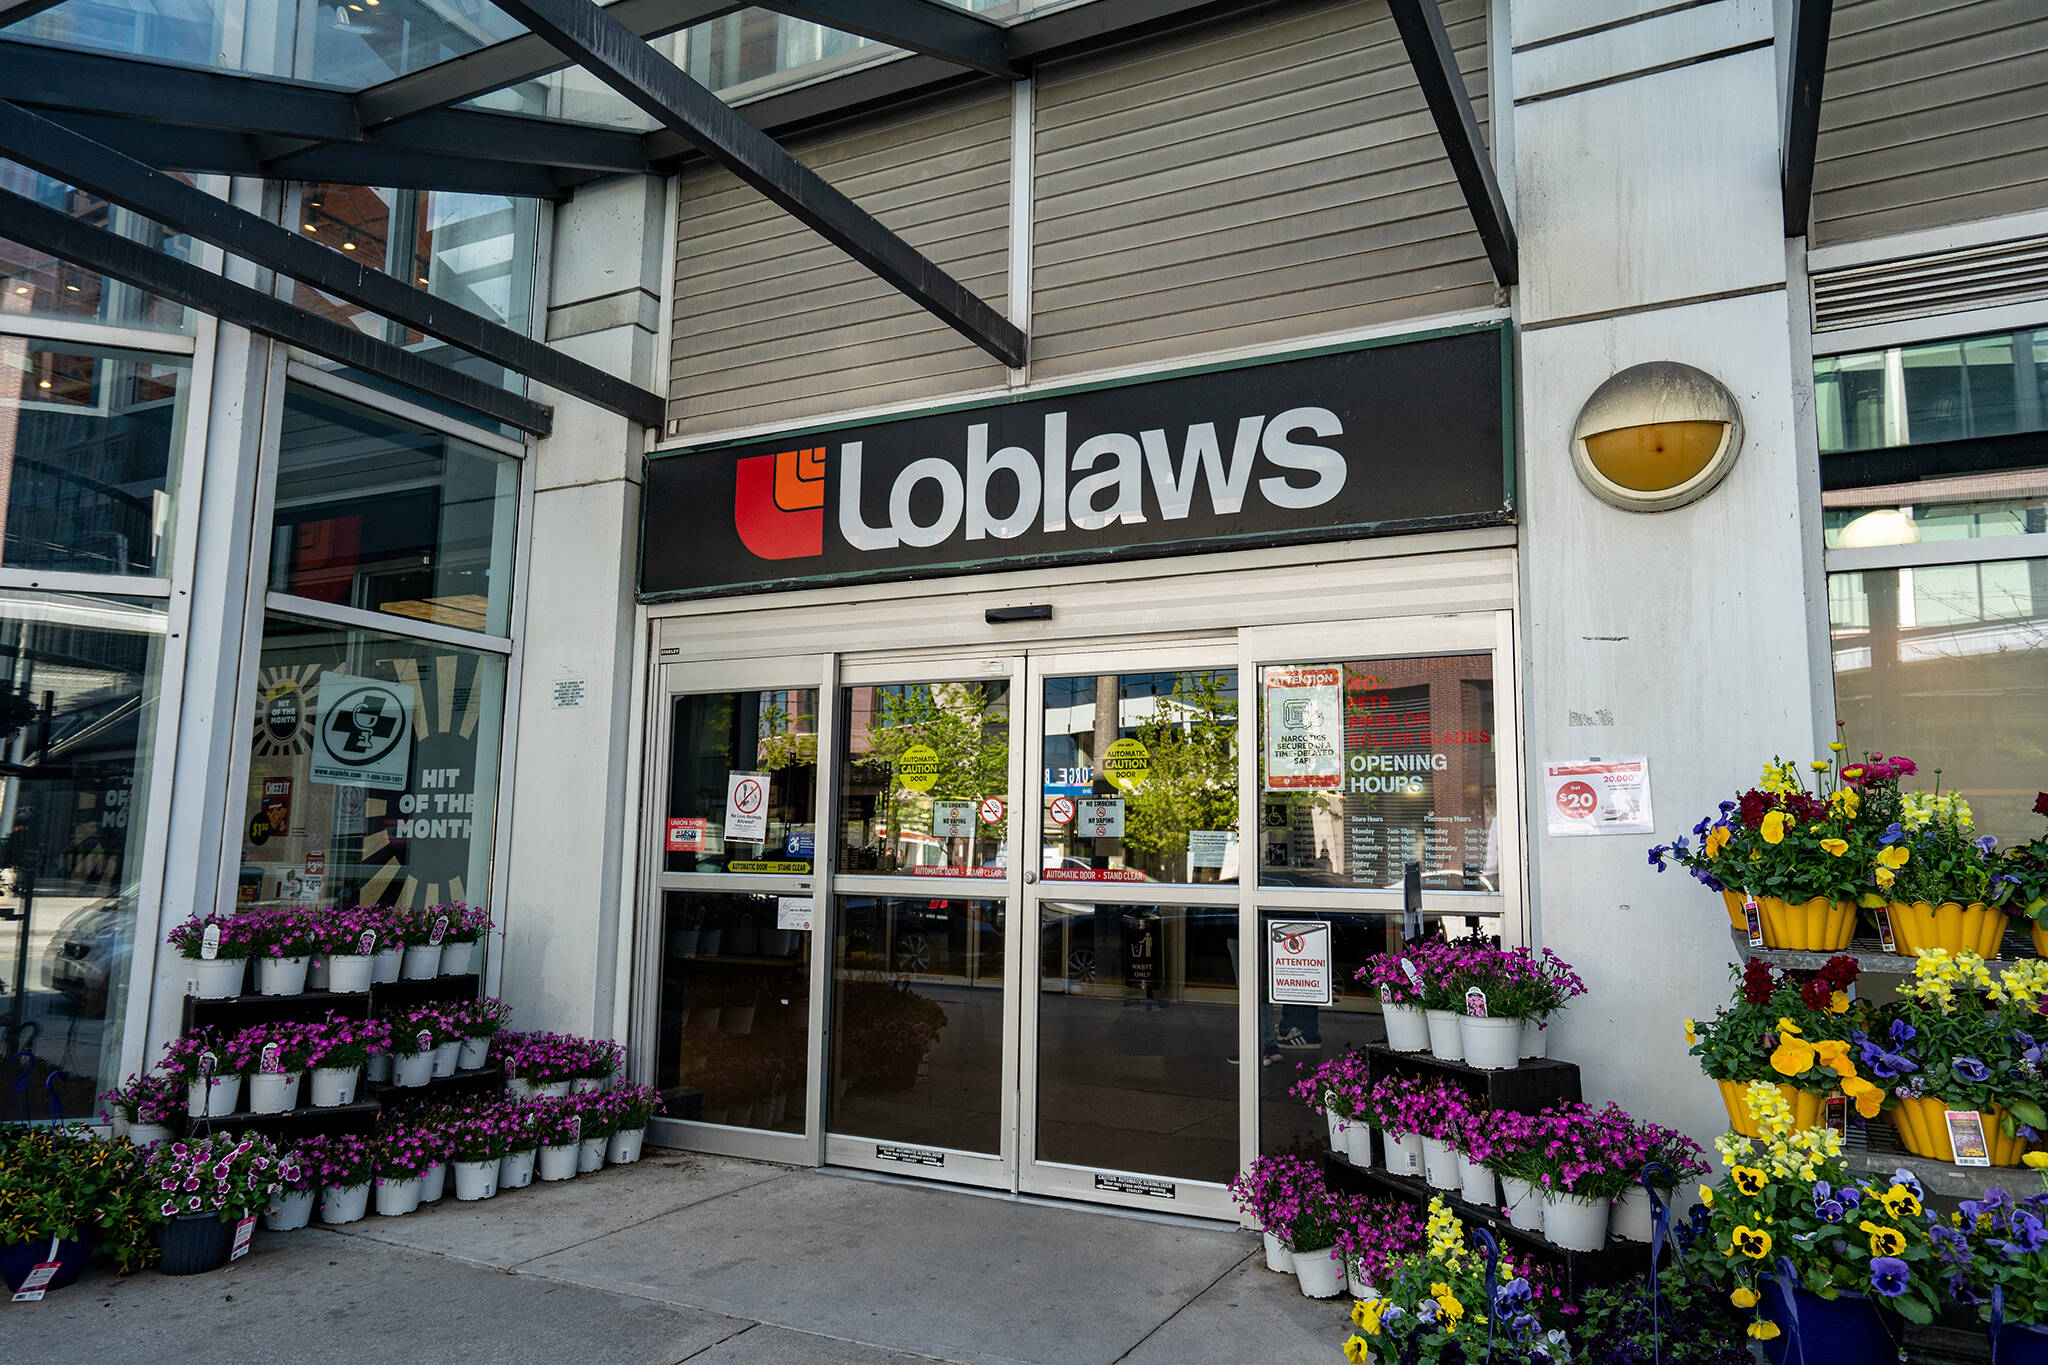 loblaws boycott